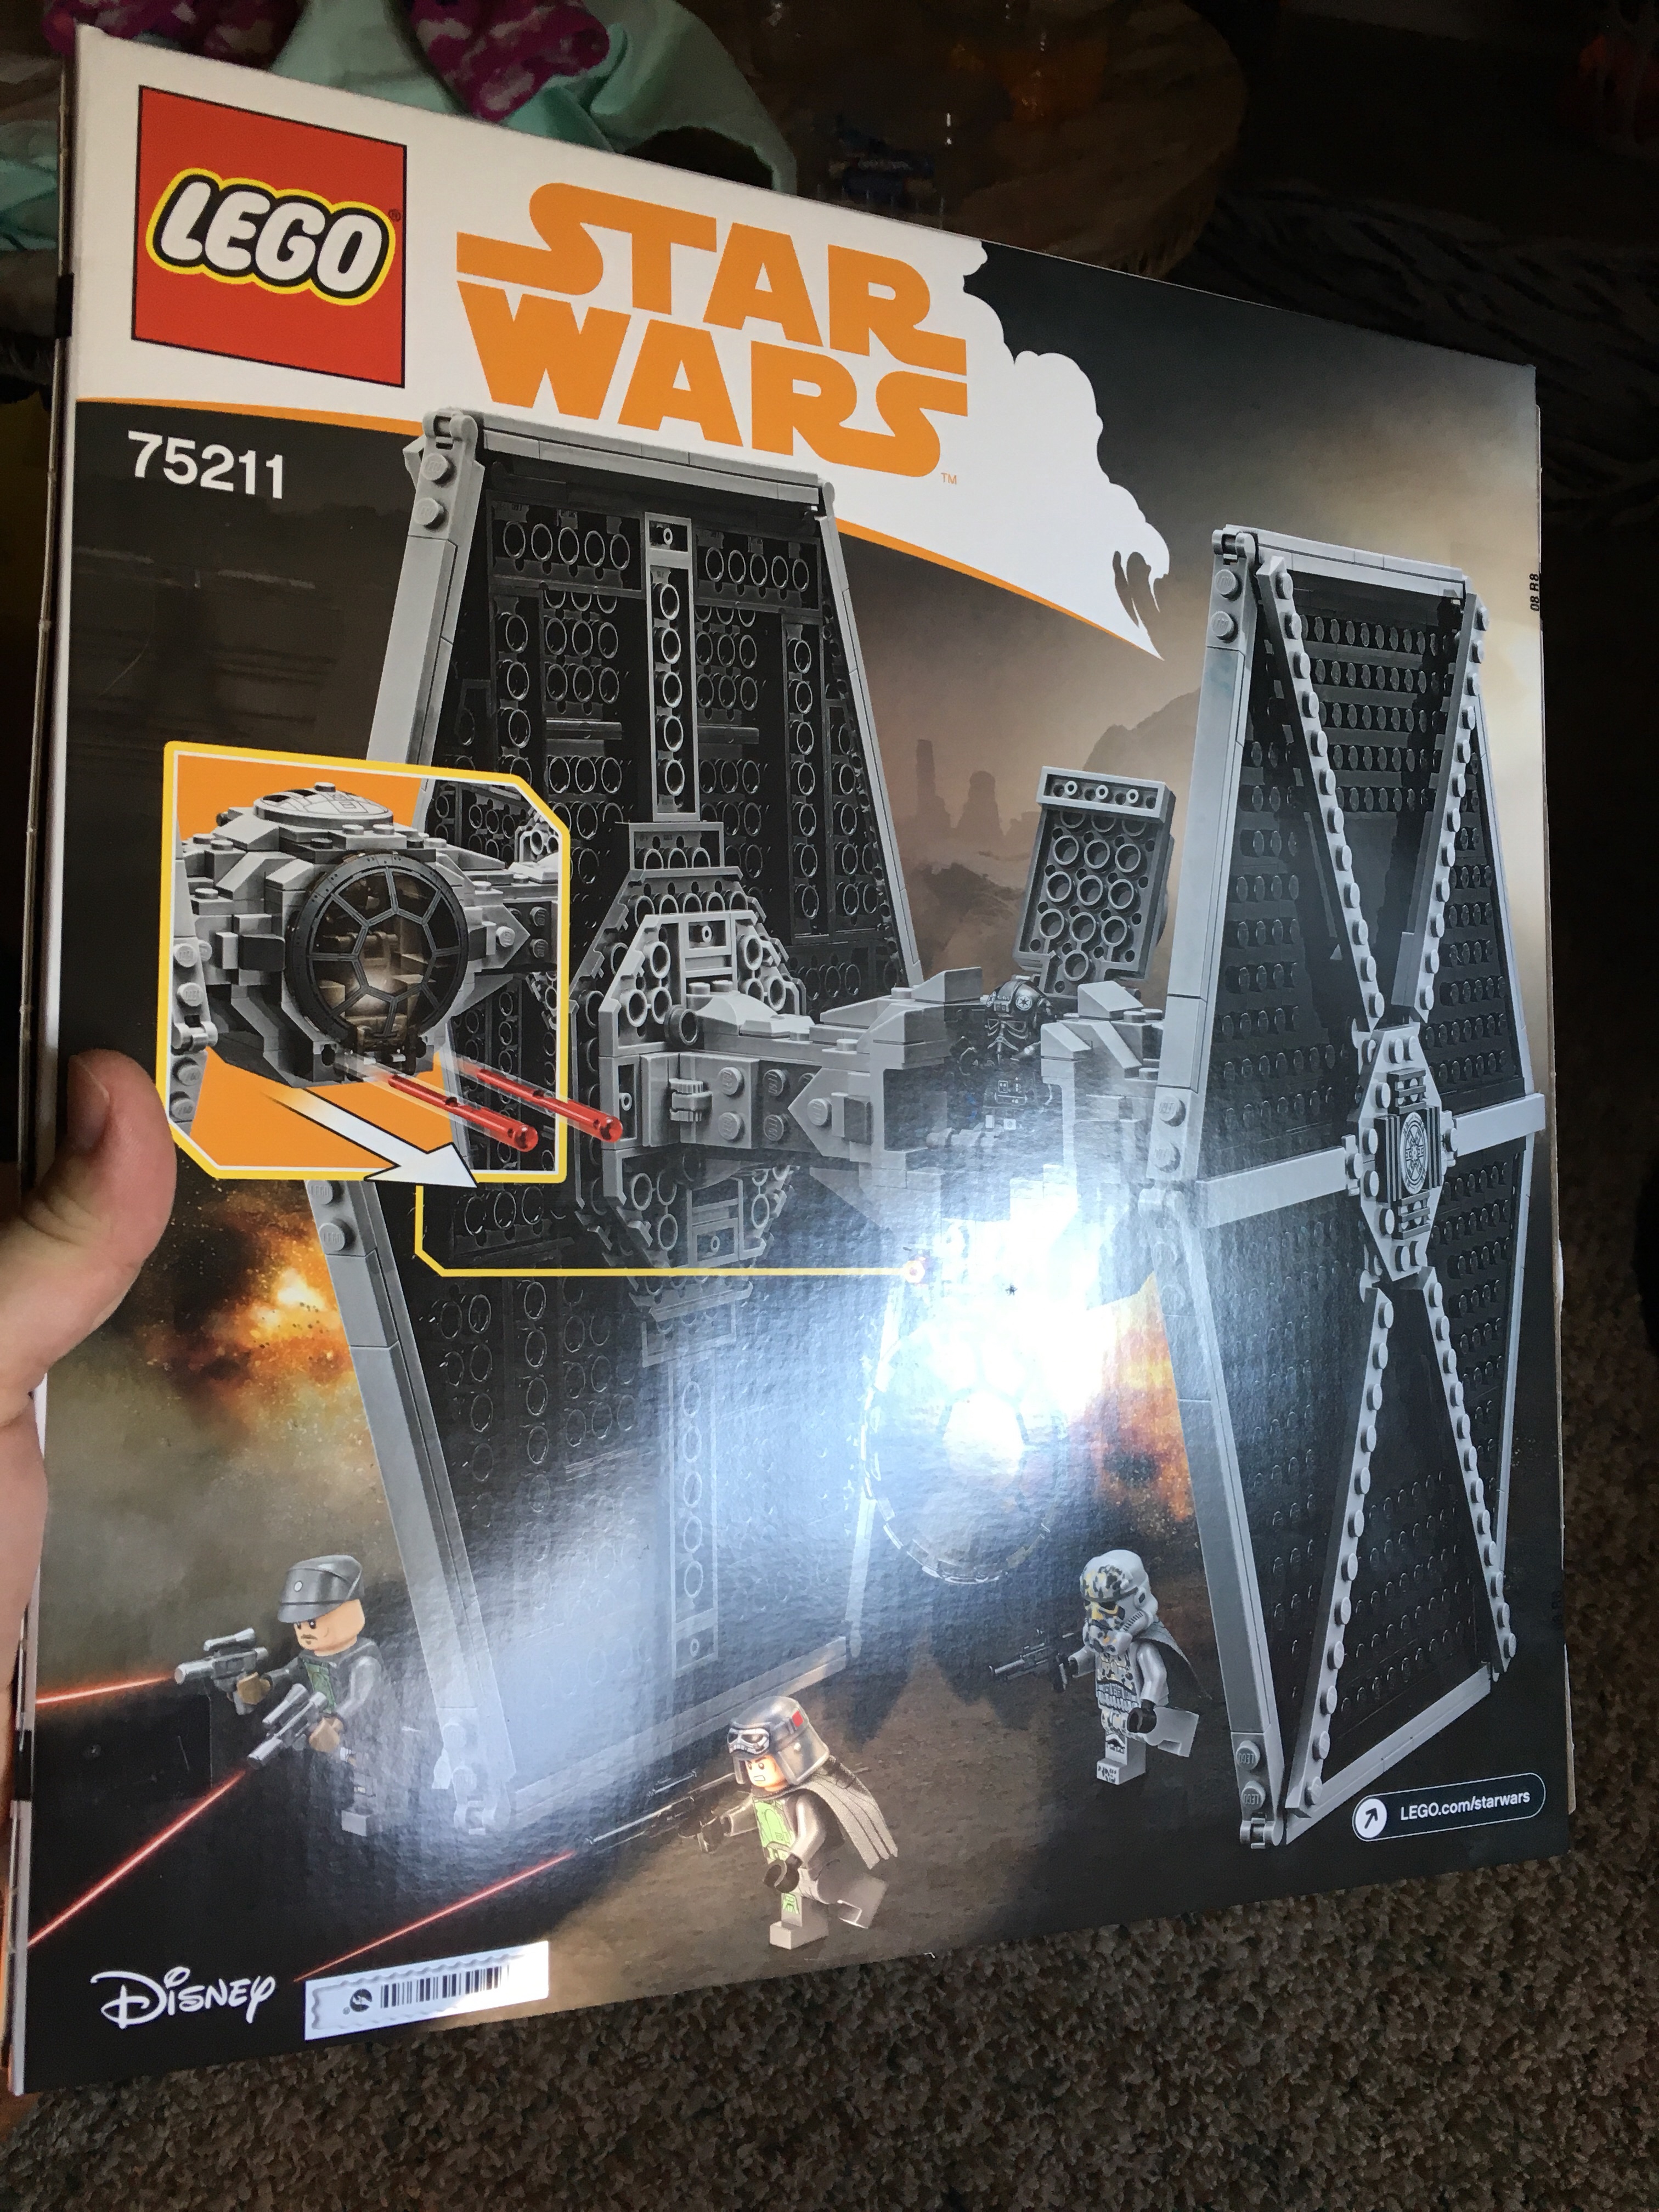 LEGO Tie Fighter in the box